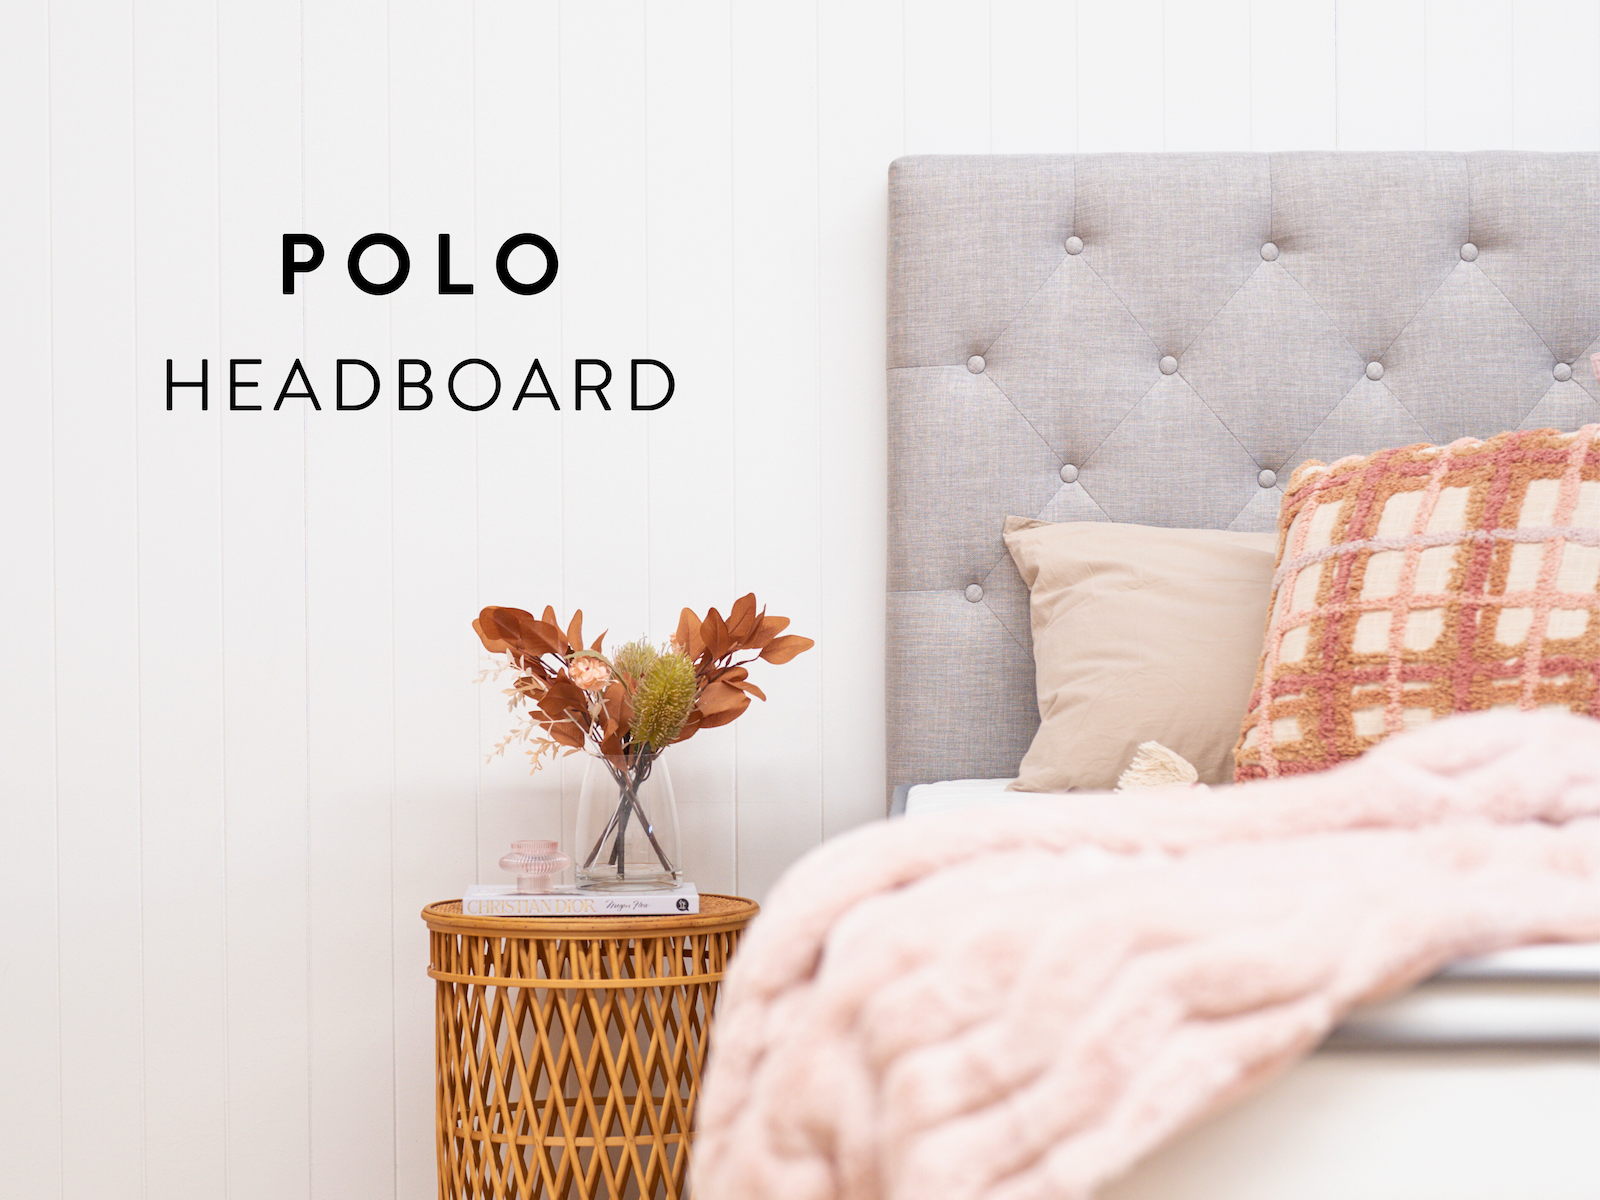 Polo Headboard